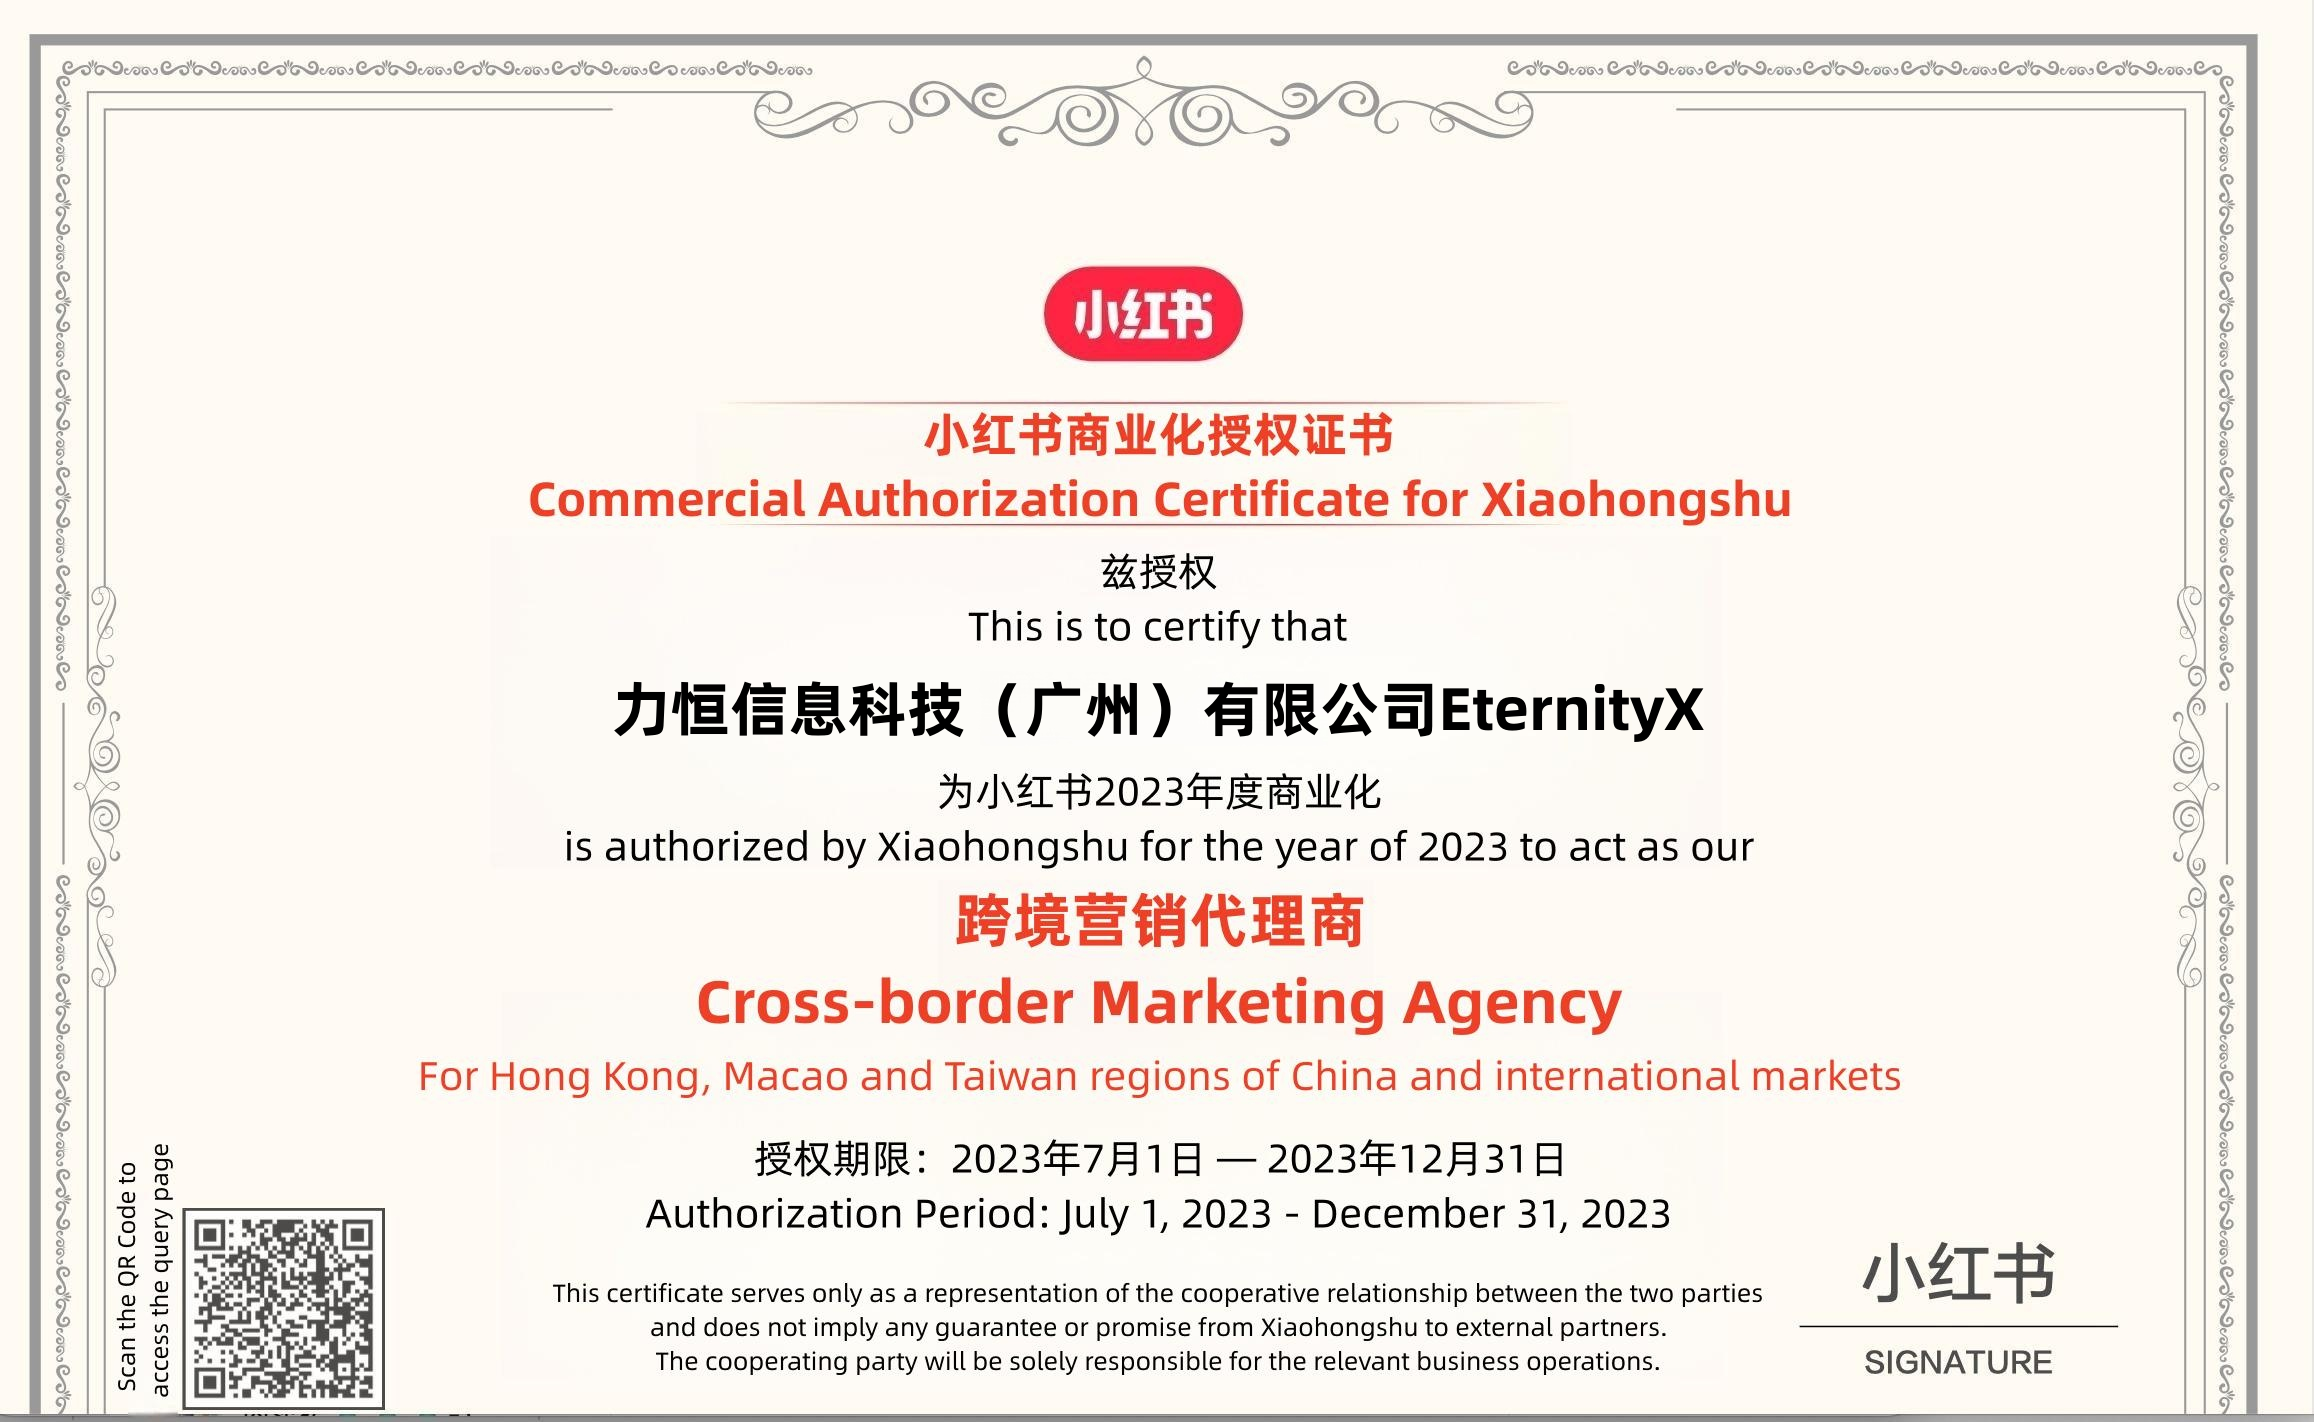 Xiaohongshu's cross-border marketing agency certificate